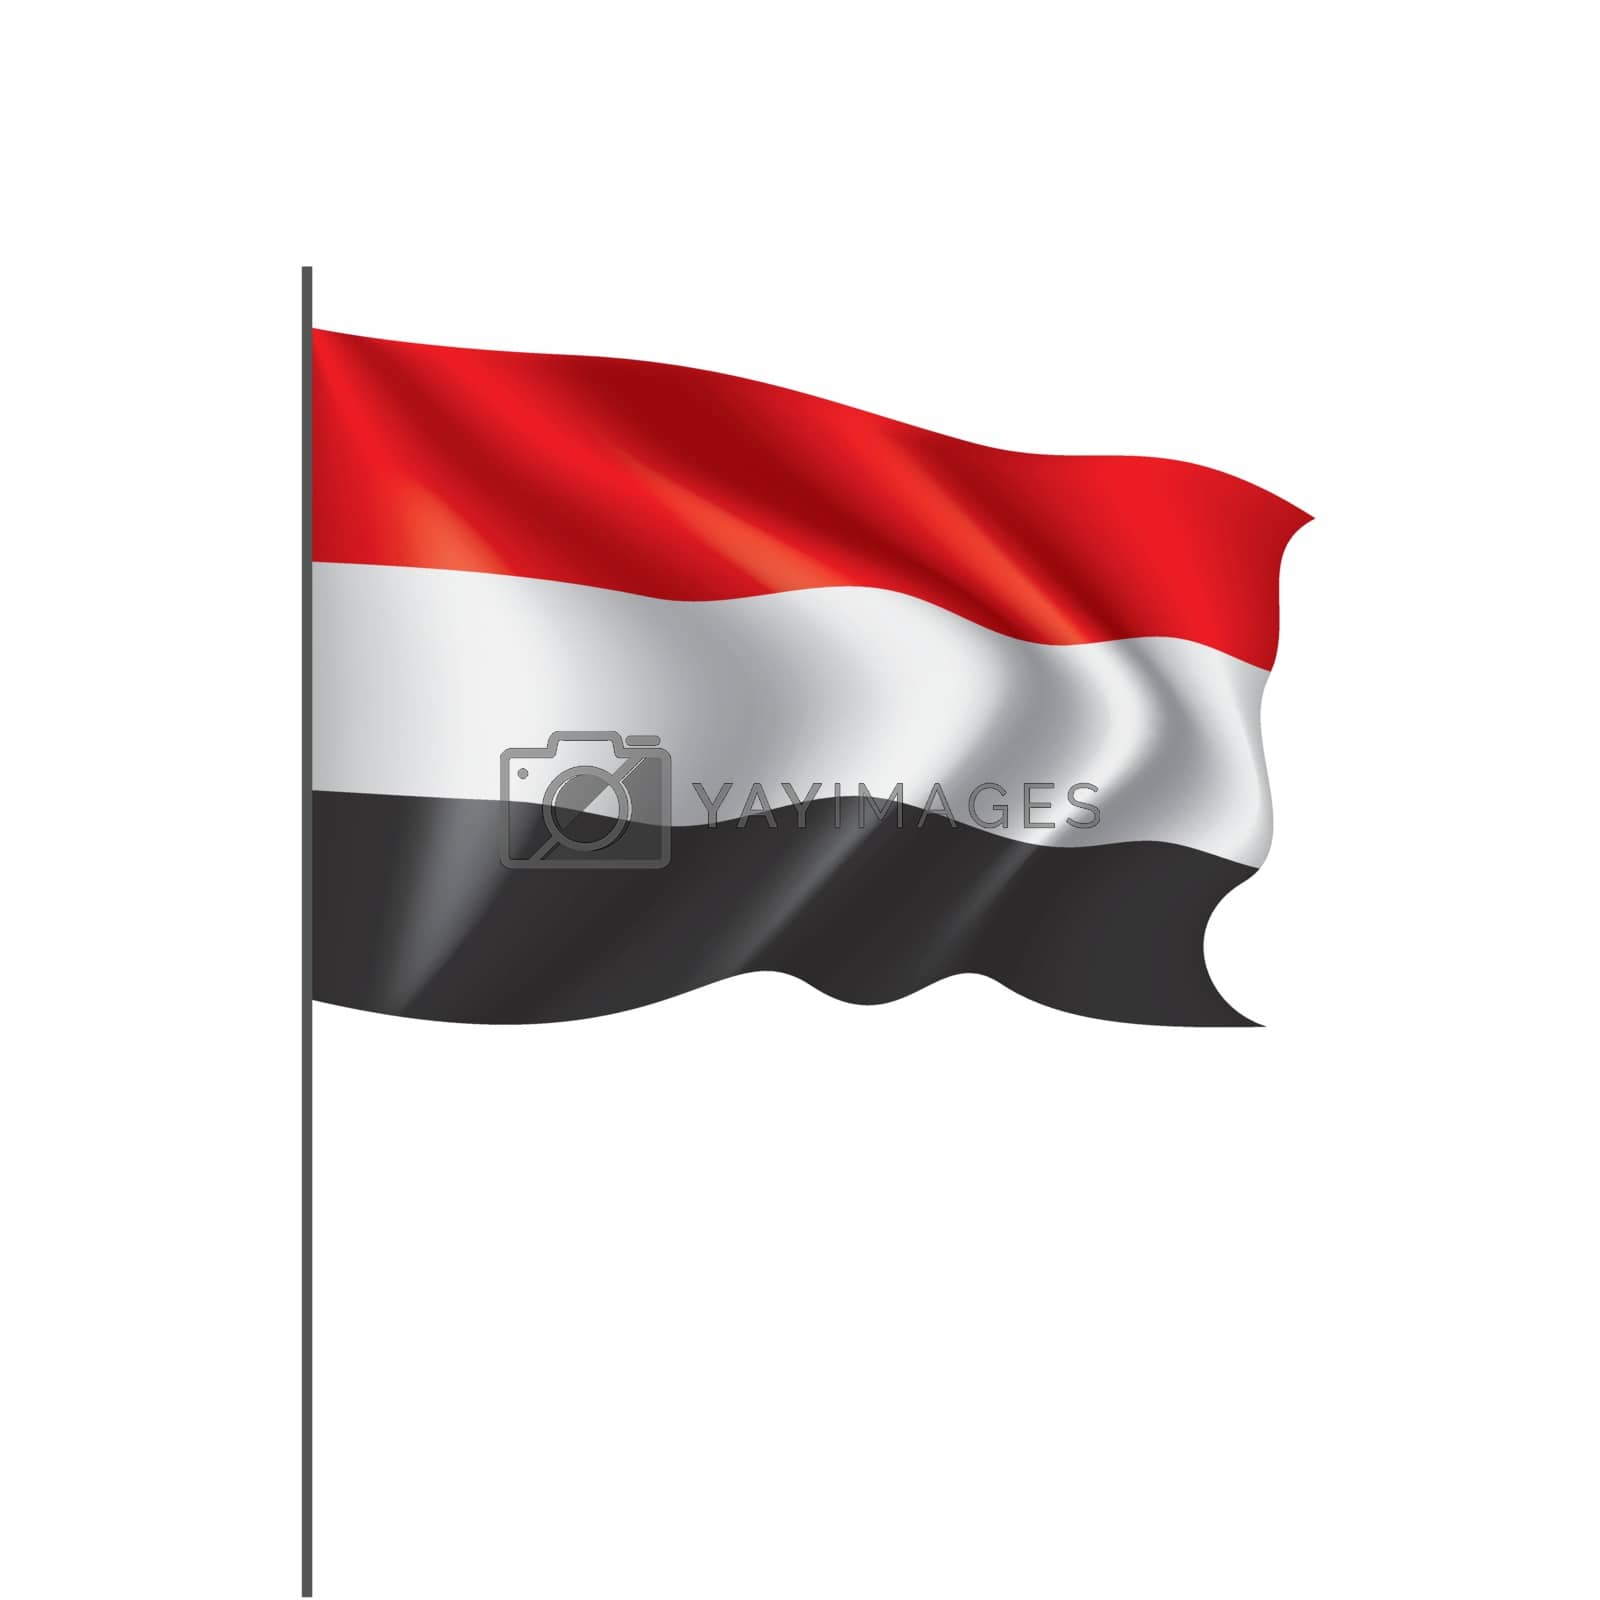 Royalty free image of Yemeni flag, vector illustration by butenkow